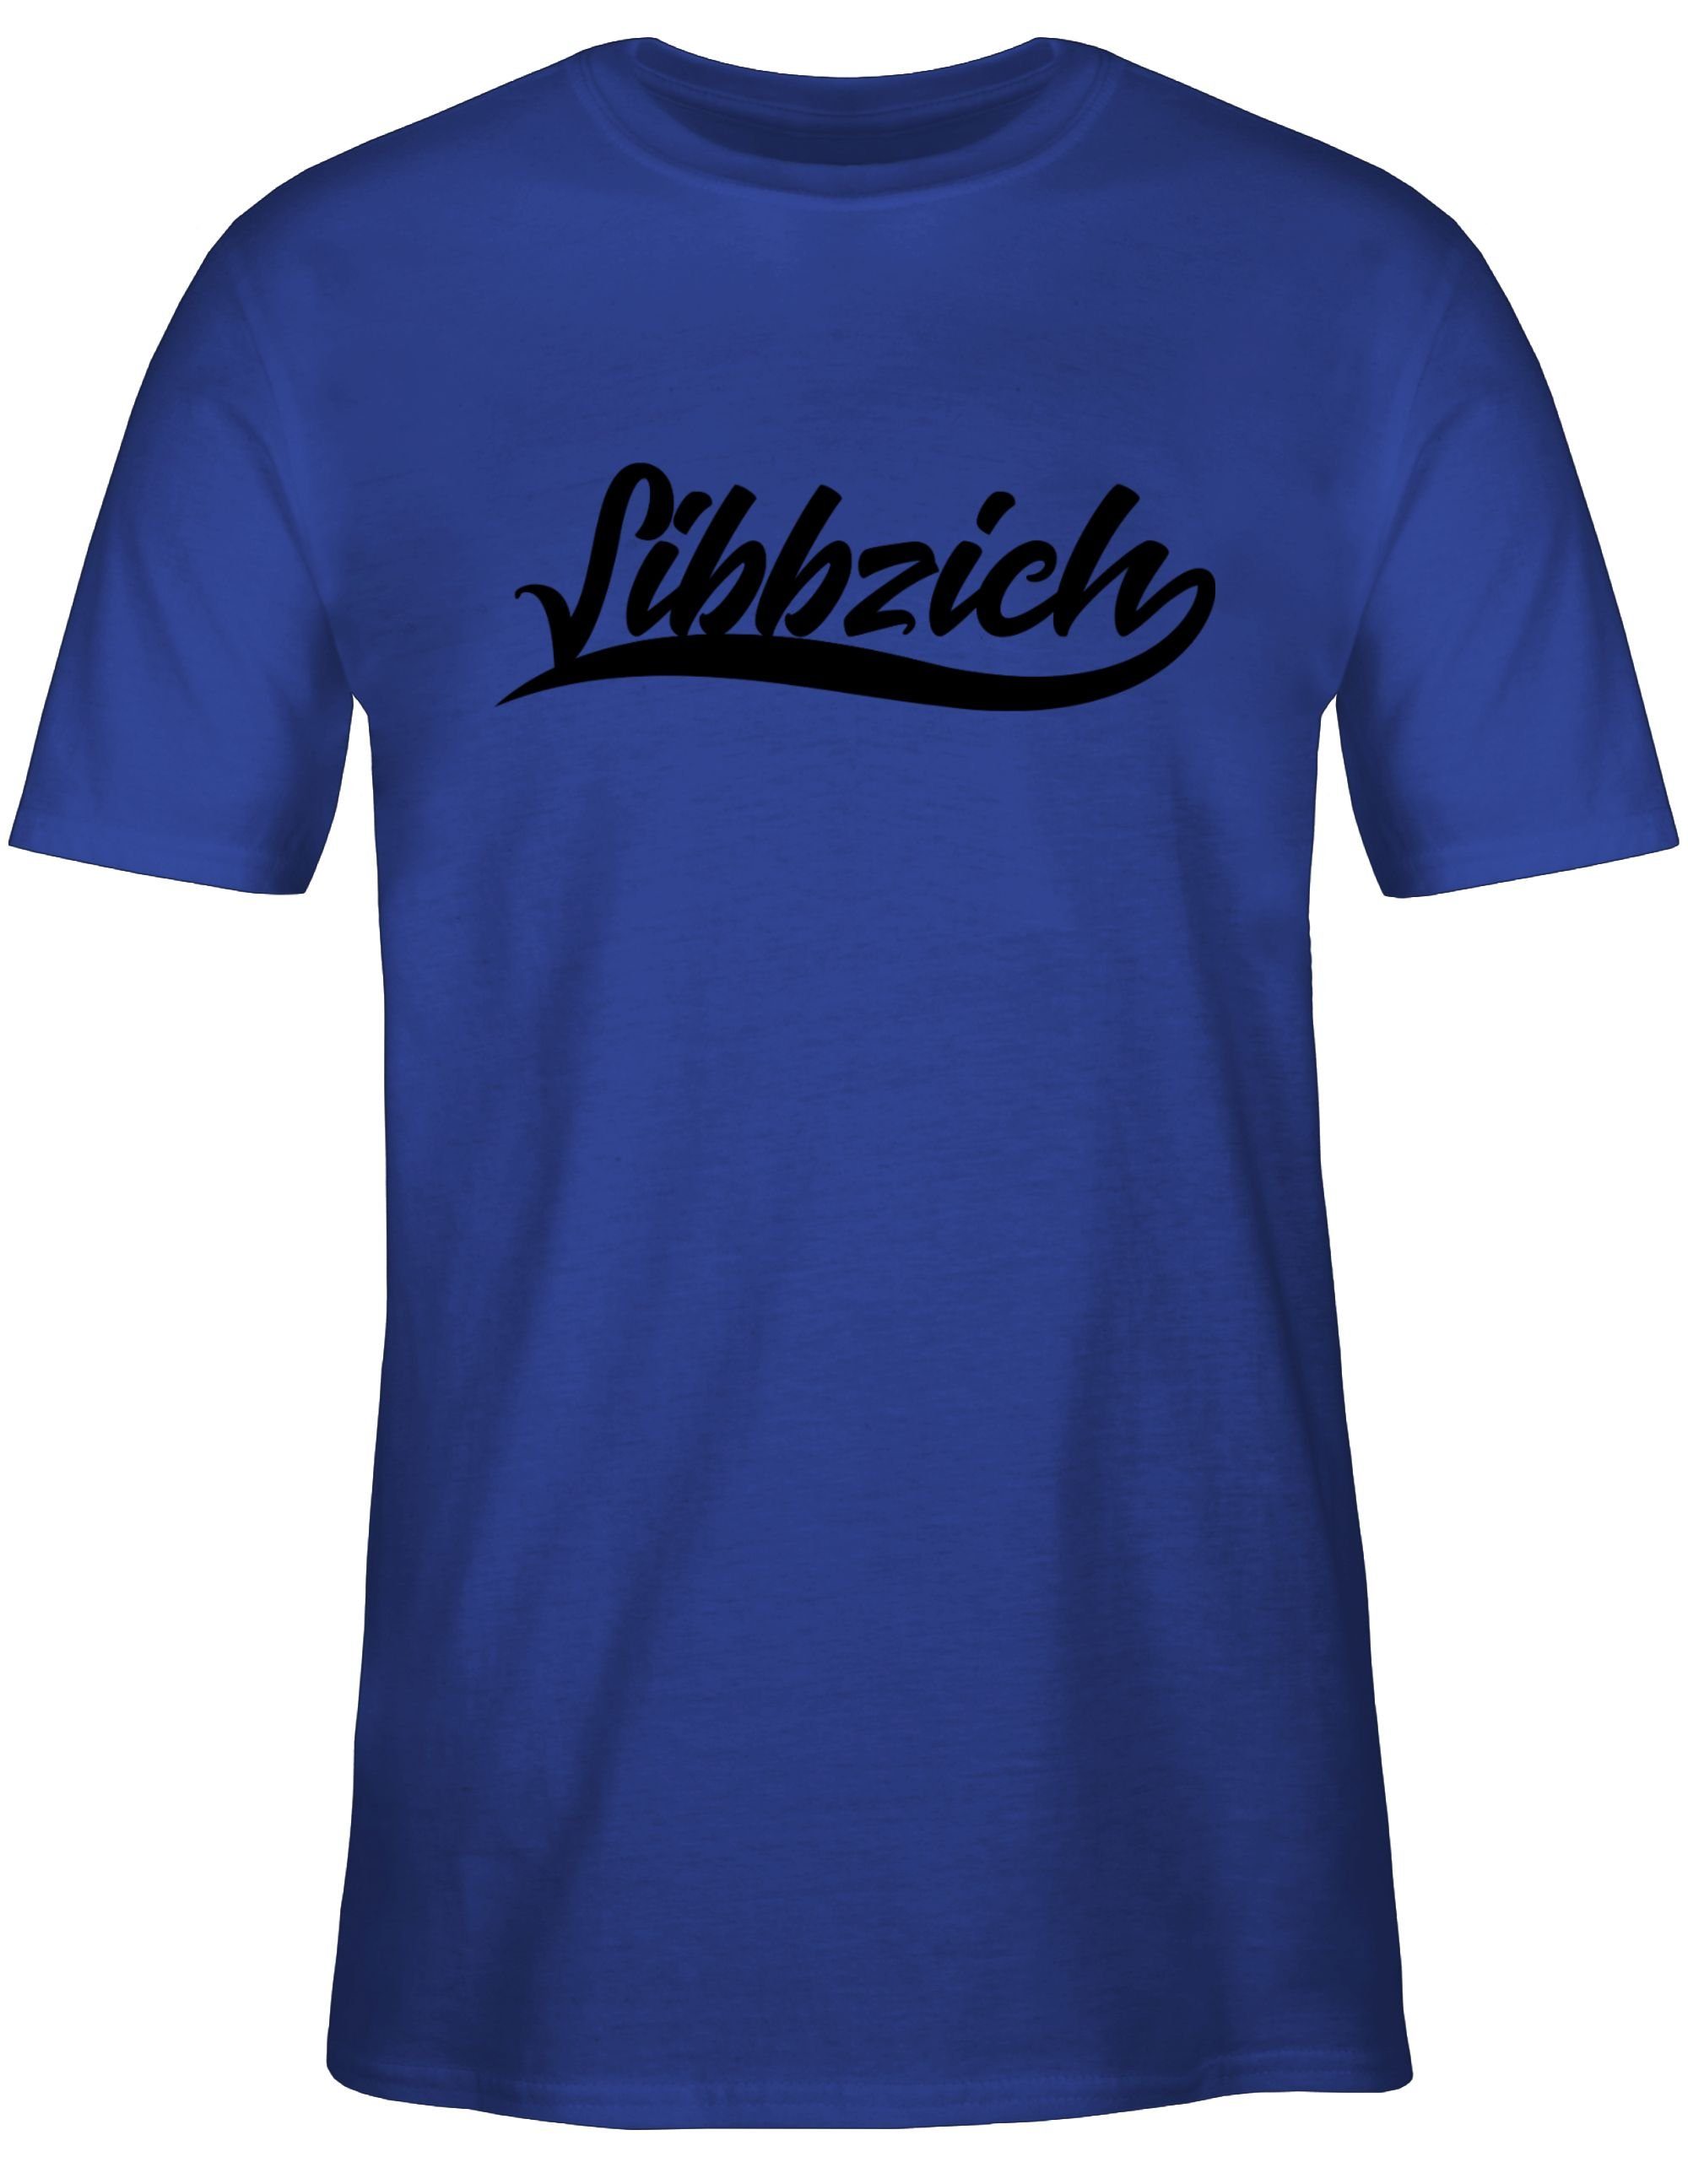 Sibbzich Shirtracer 70. T-Shirt Royalblau 2 Geburtstag